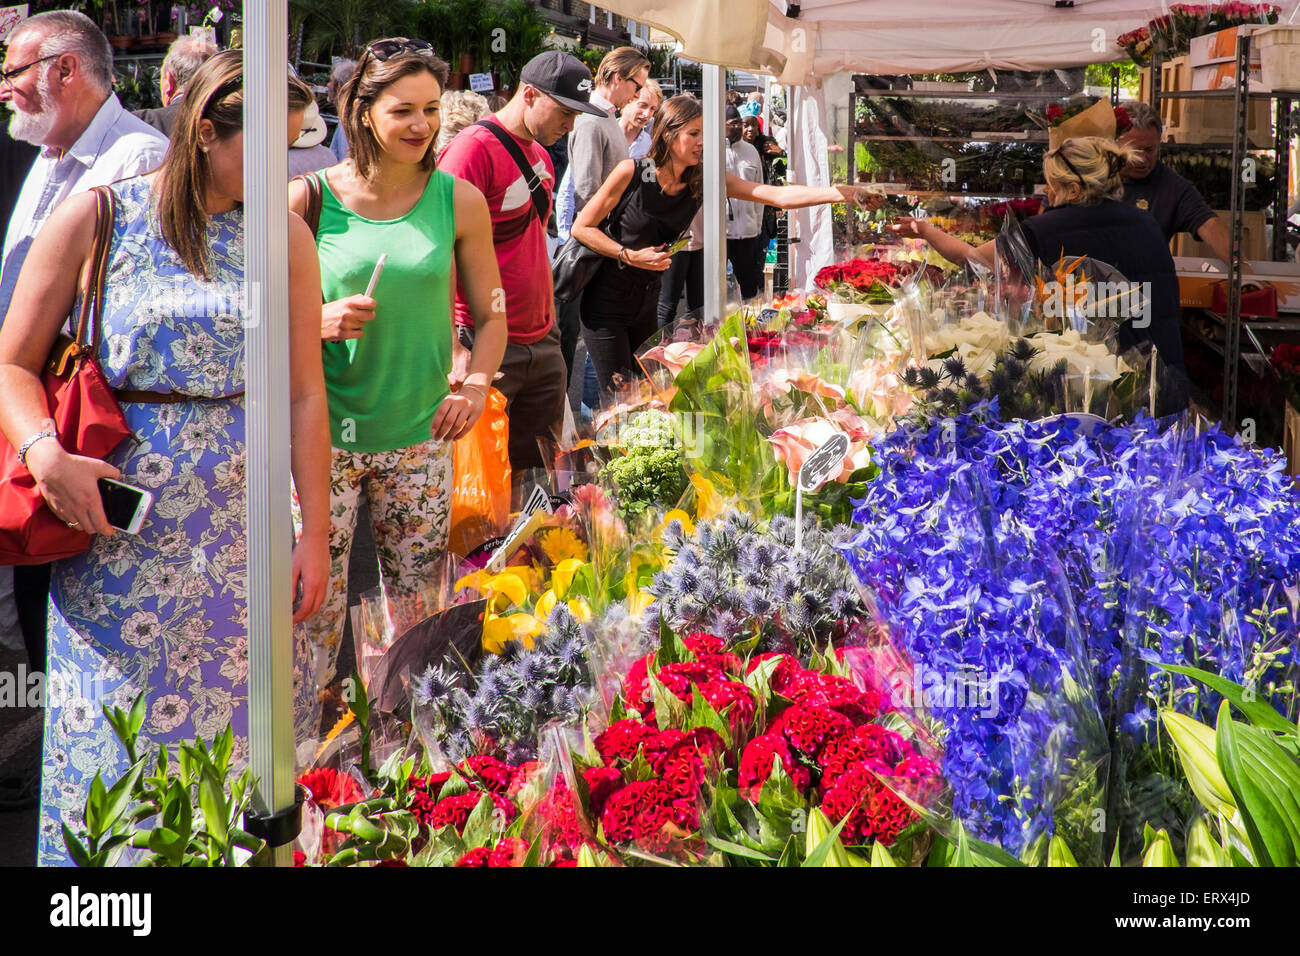 Columbia road flower market, East London, England, Regno Unito Foto Stock